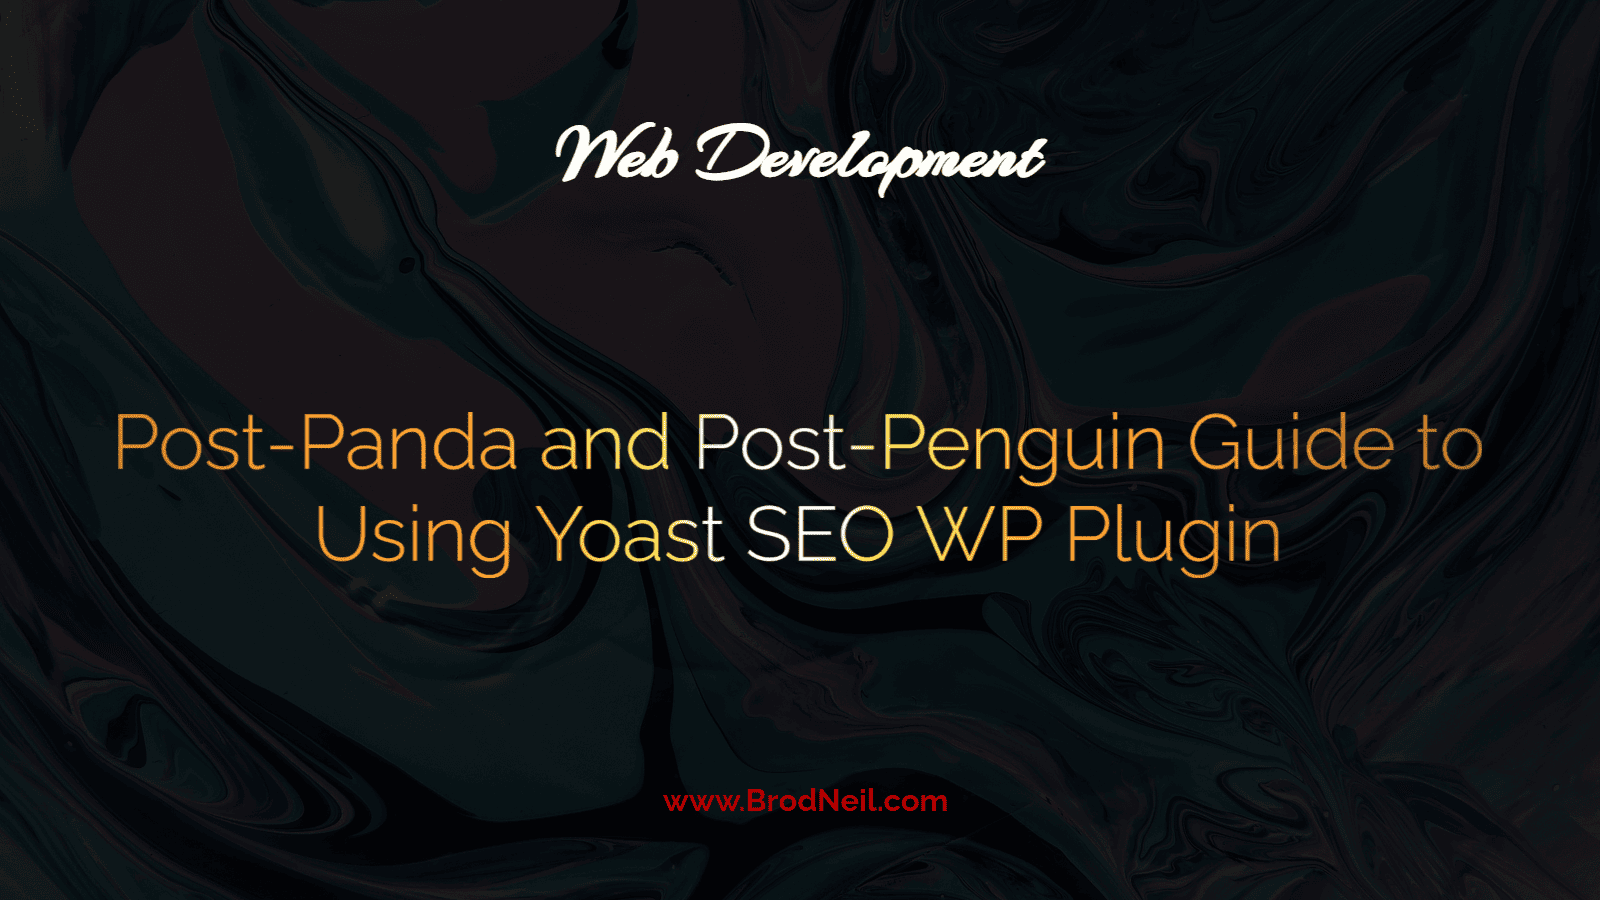 Post-Panda and Post-Penguin Guide to Using Yoast SEO WP Plugin